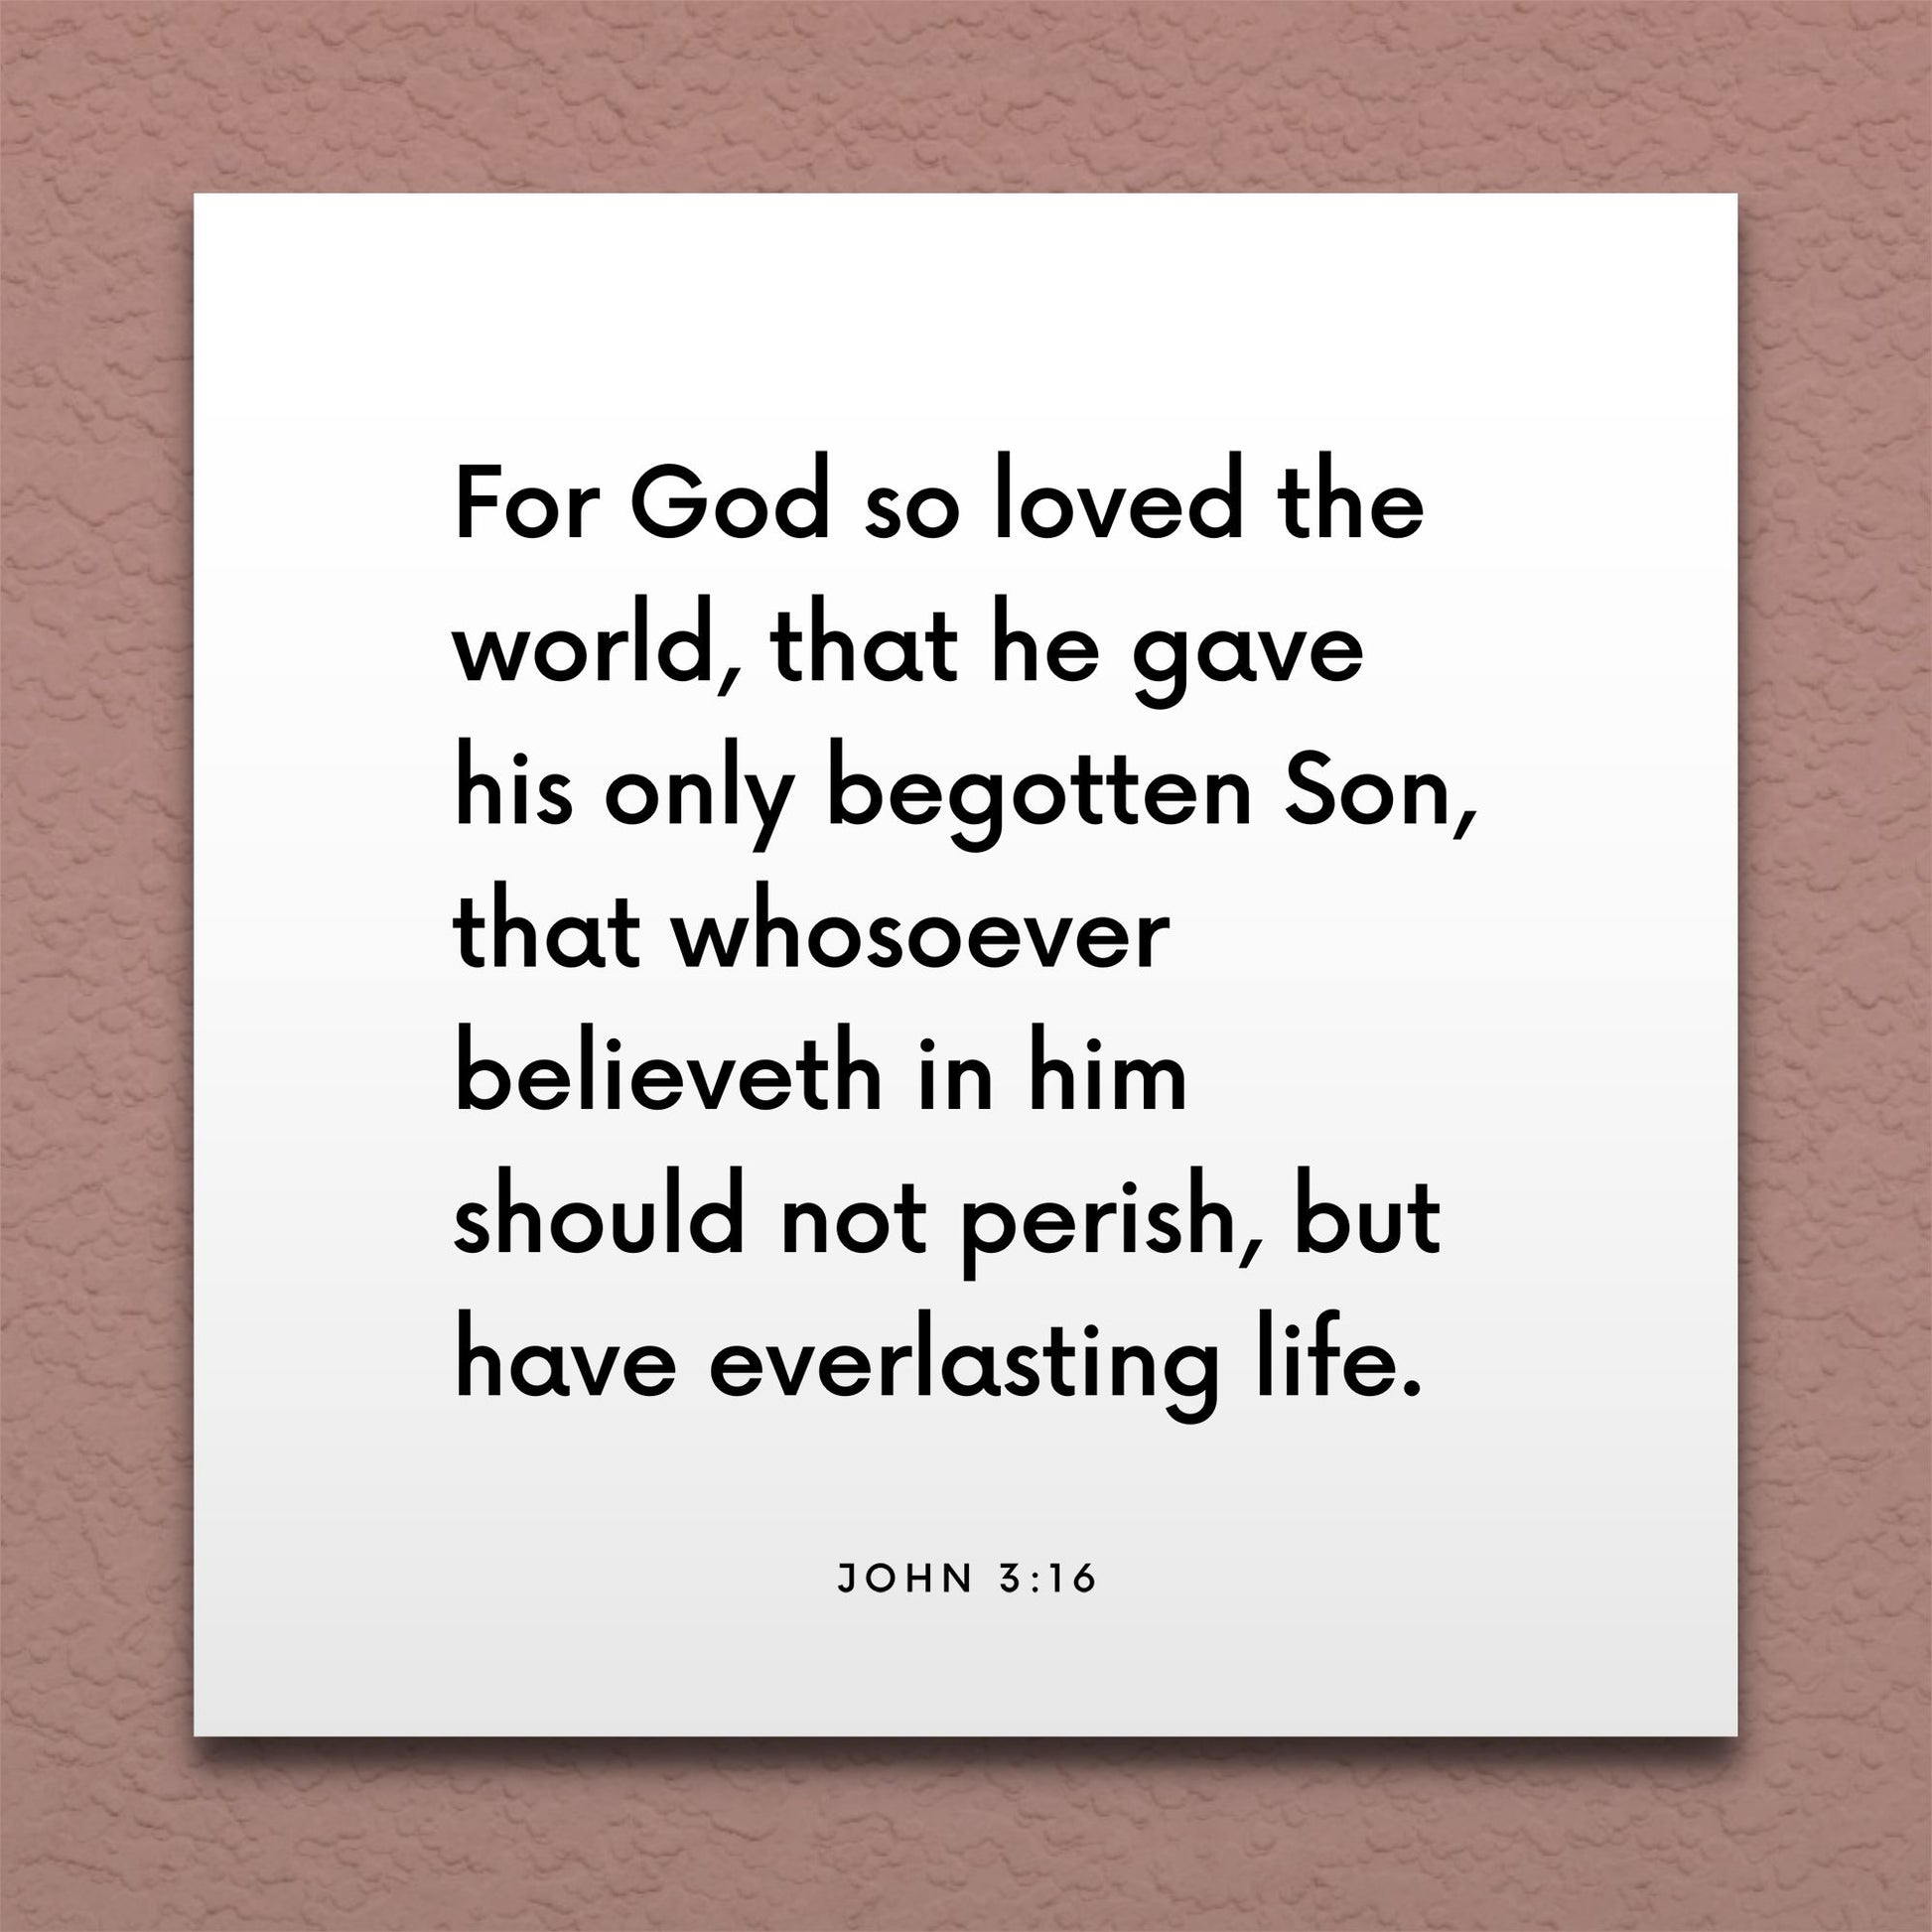 Wall-mounted scripture tile for John 3:16 - "For God so loved the world"